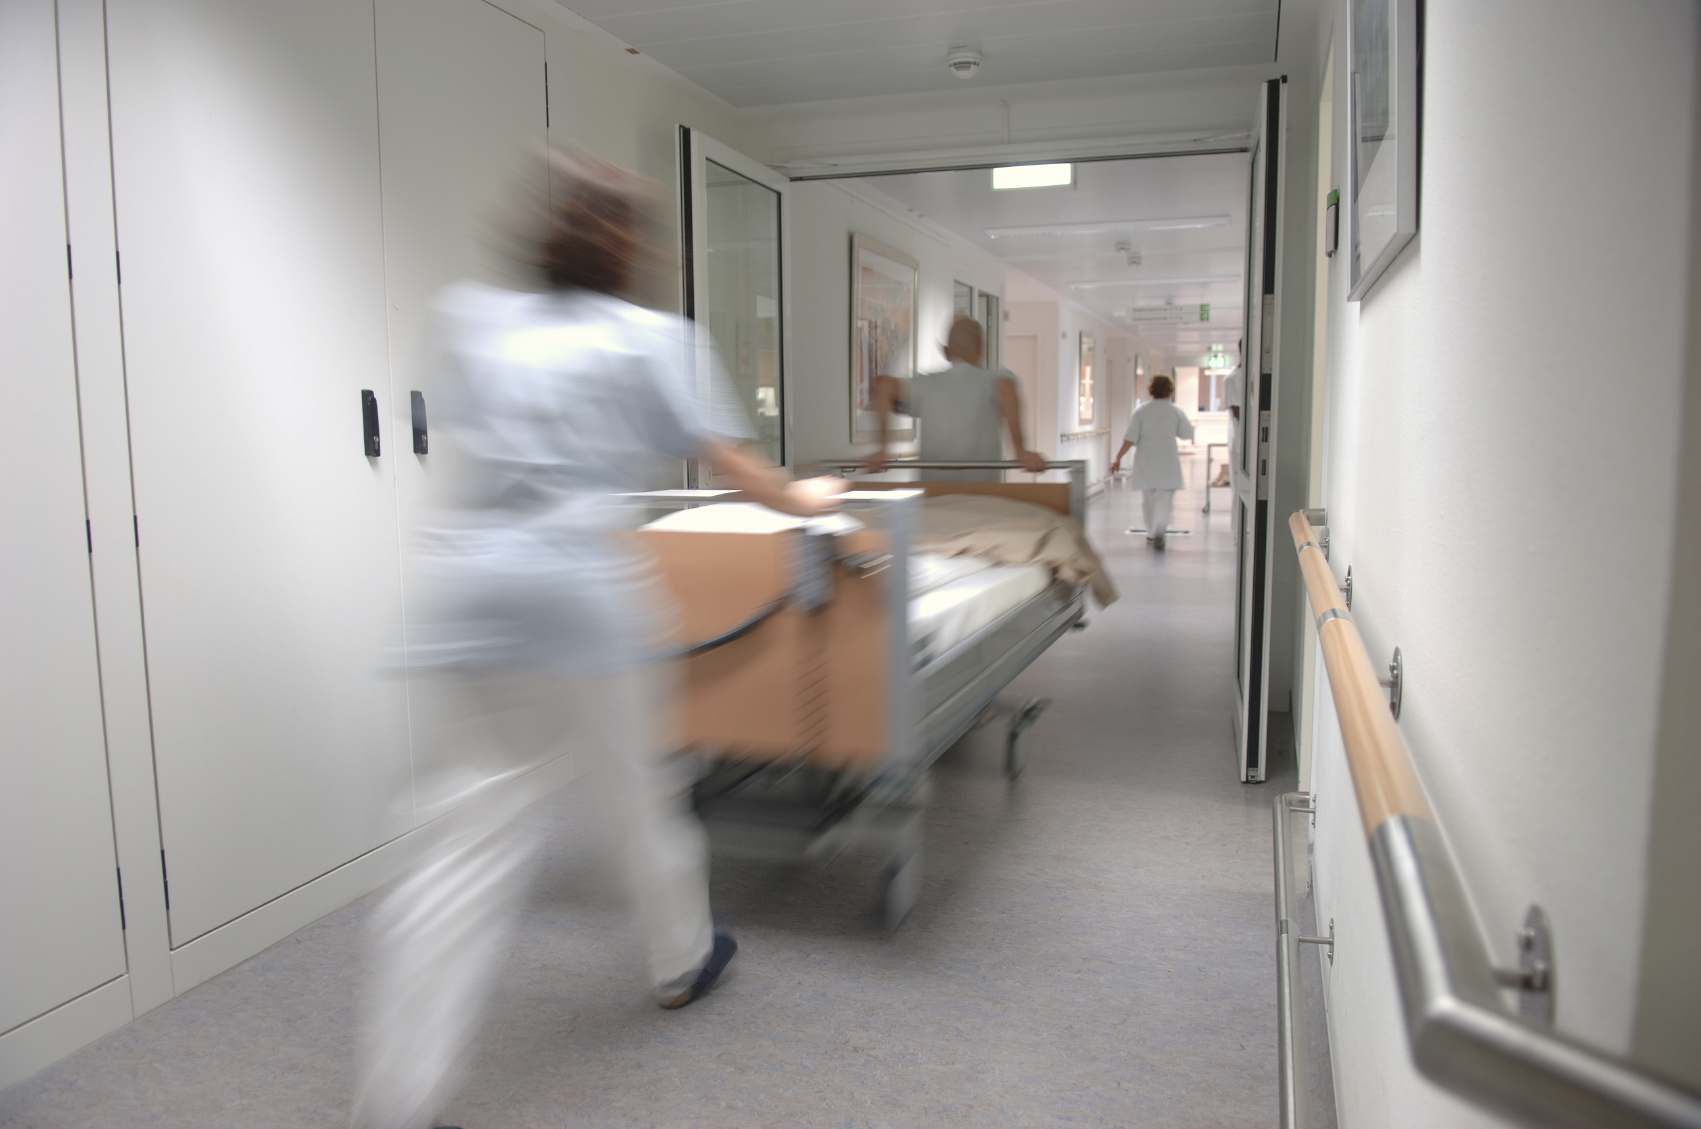 A nurse wheels a patient on a gurney down a hospital corridor.